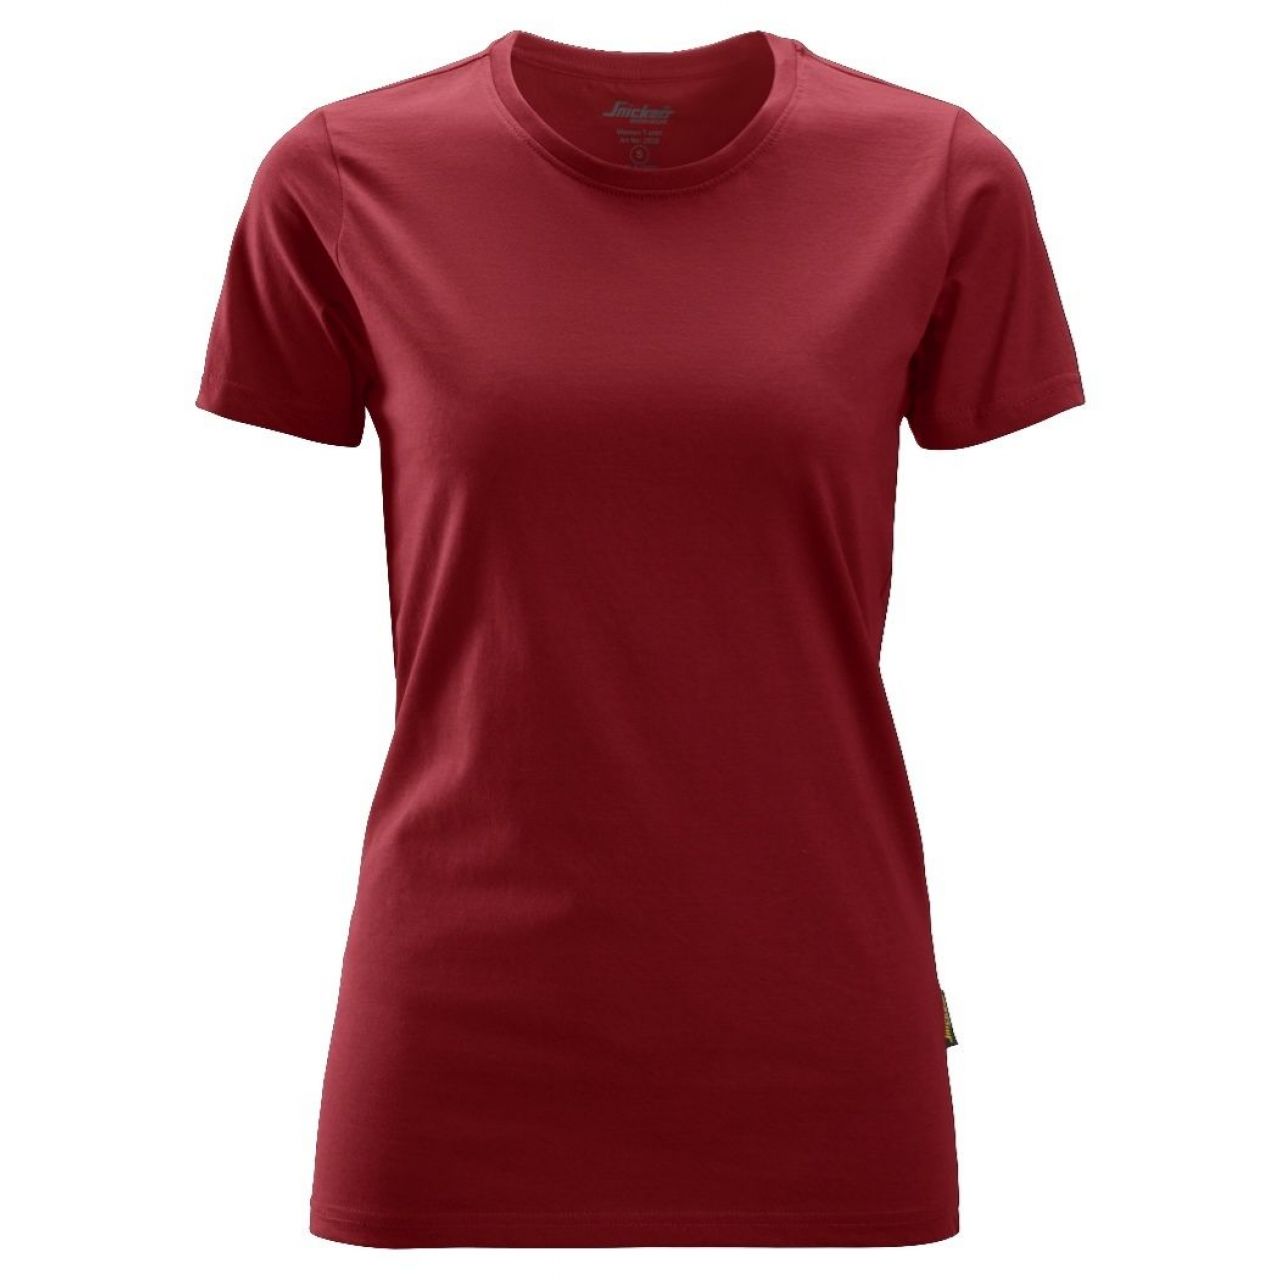 Camiseta mujer rojo talla M